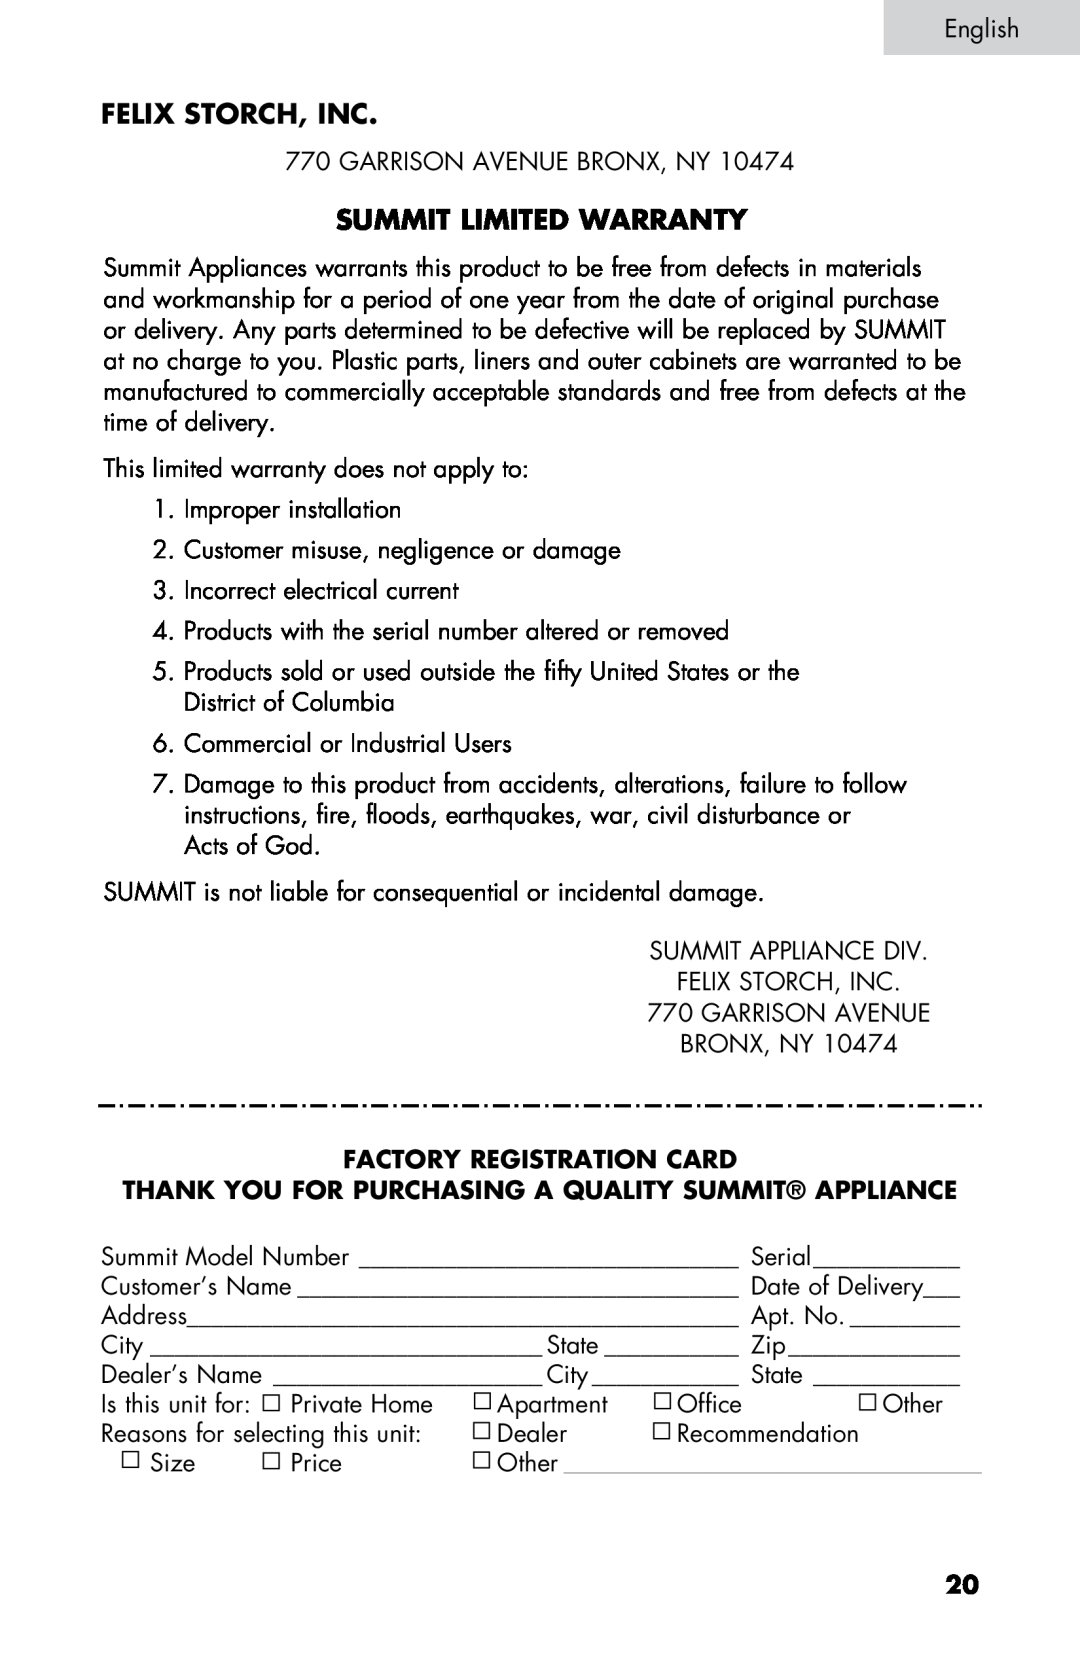 Summit SM900BL, SM900WH user manual Felix Storch, Inc, Summit Limited Warranty, Factory Registration Card 